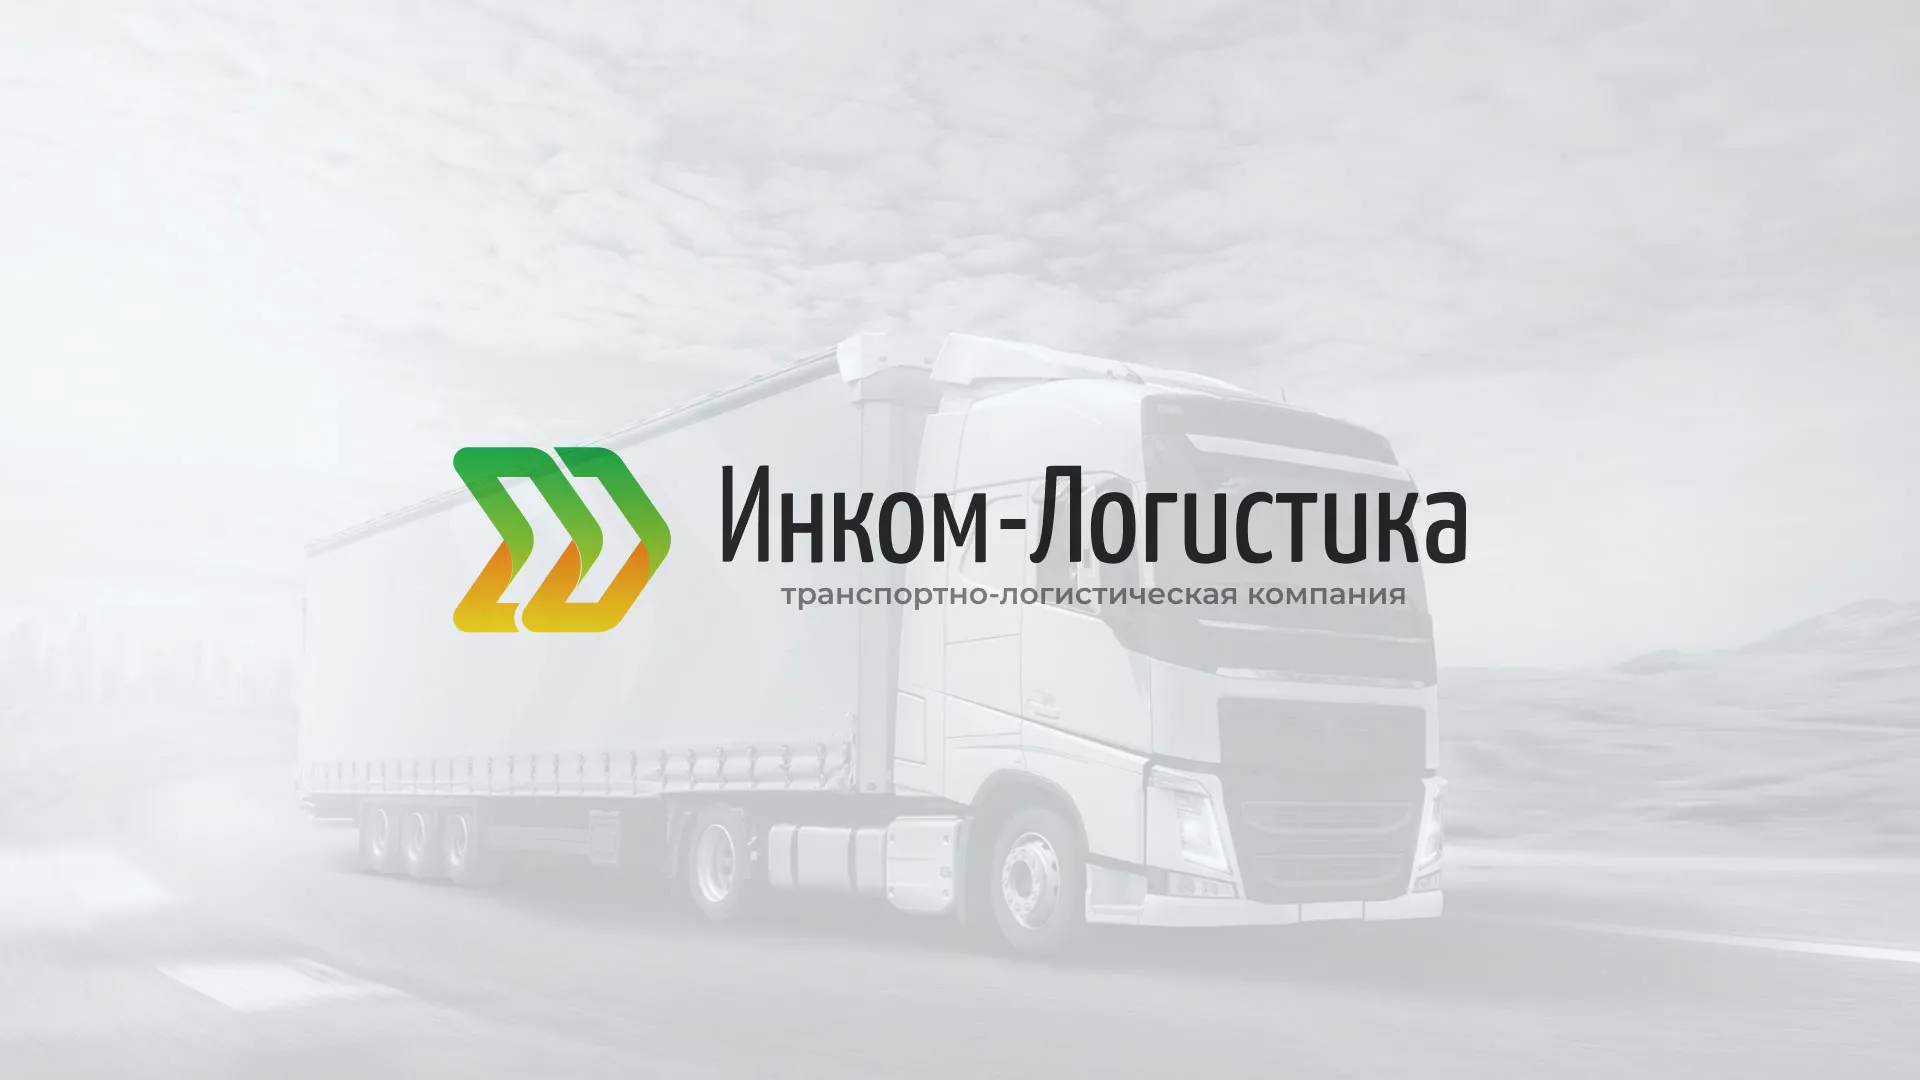 Разработка логотипа и сайта компании «Инком-Логистика» в Суоярви